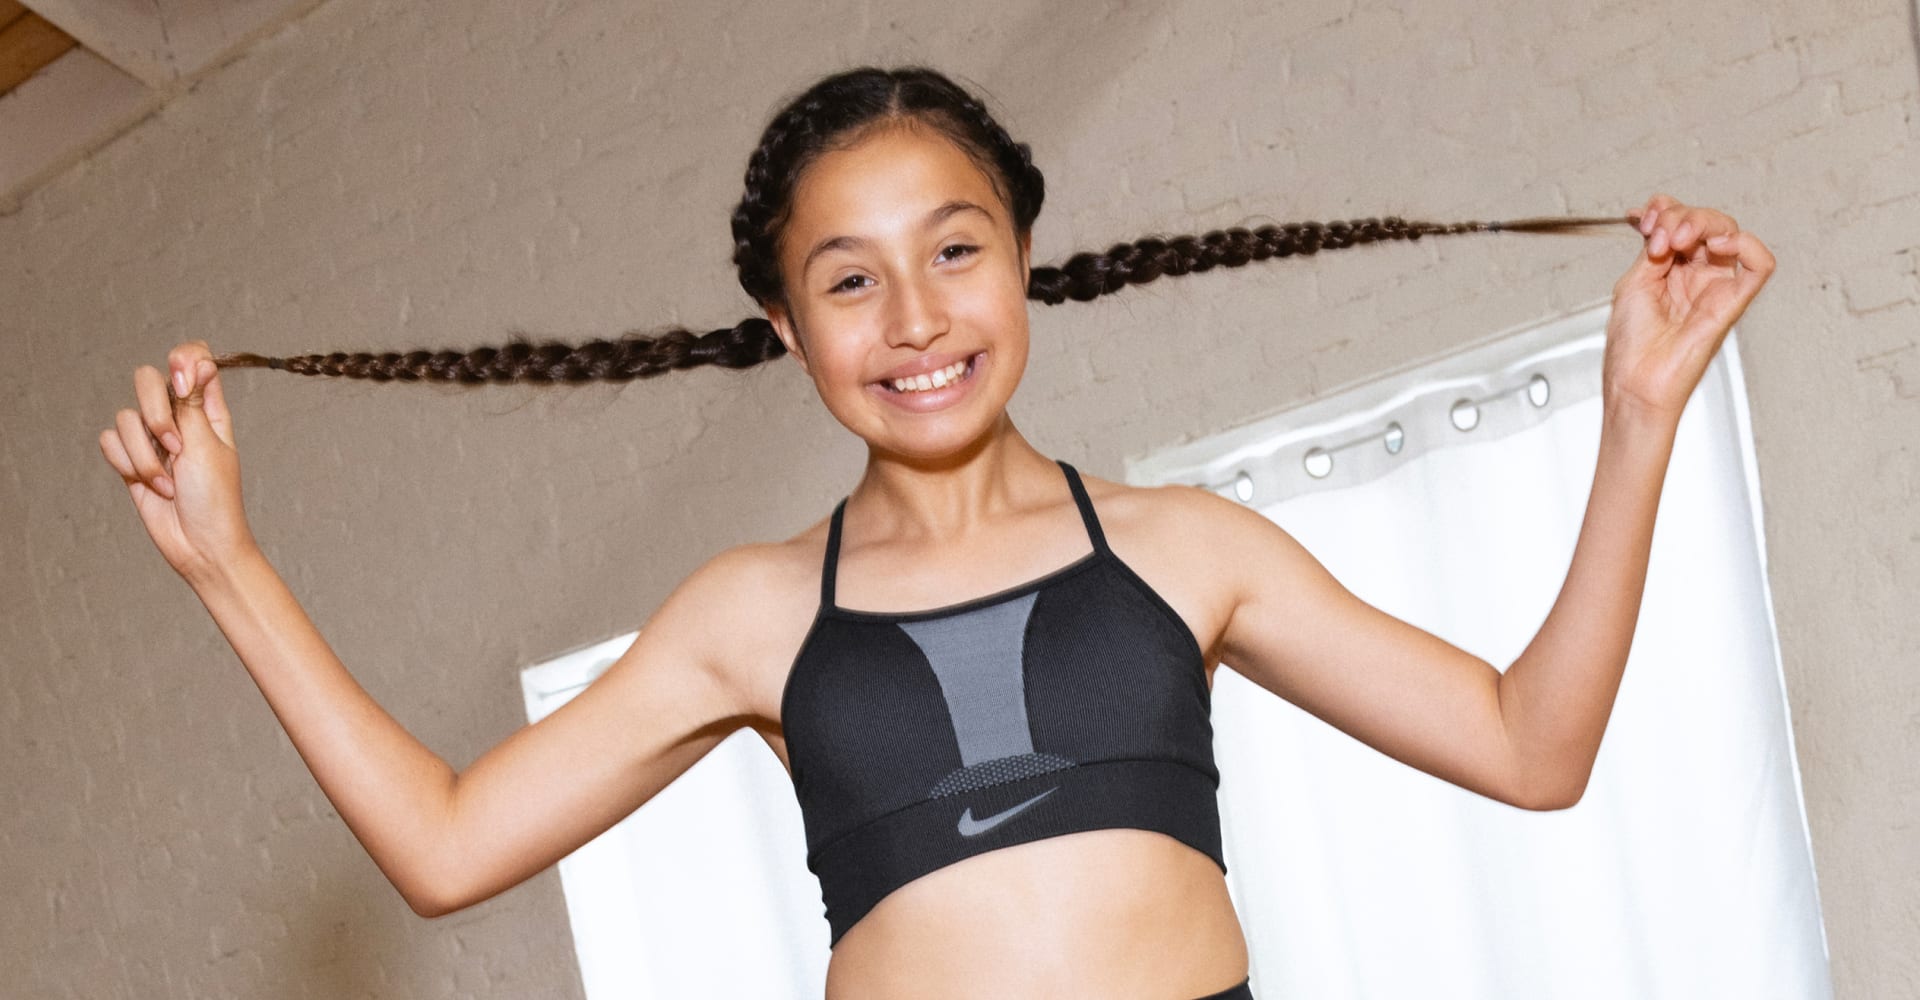 Nike Girl's Indy Seemless Sports Bra - Age 14 (XL) - New ~ CU8230